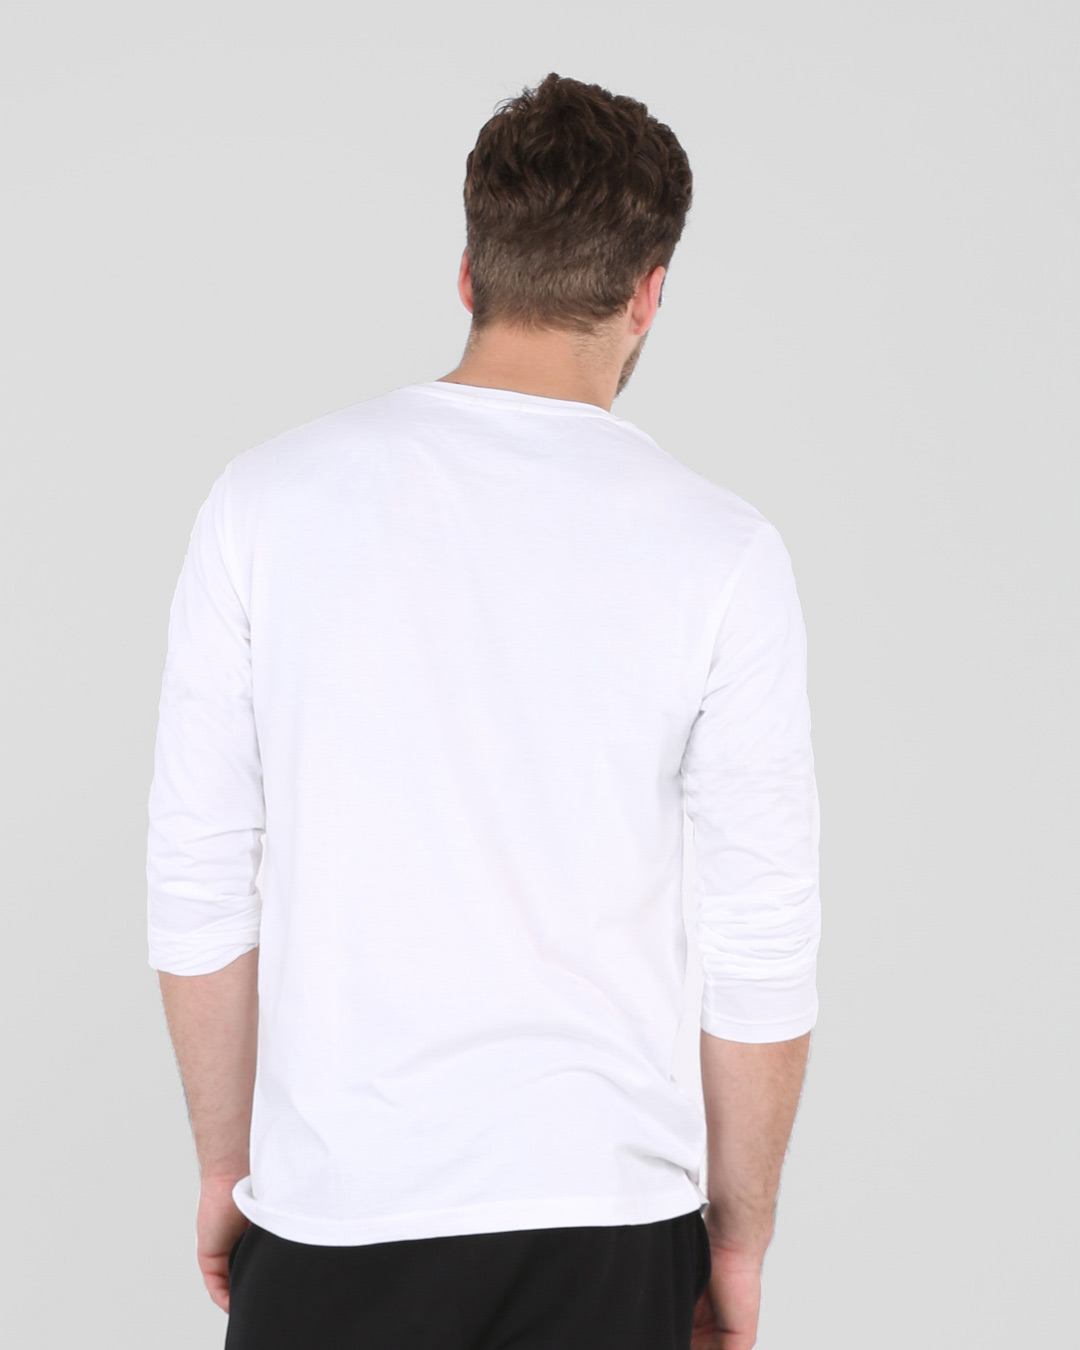 Shop I Would Prefer Neat Full Sleeve T-Shirt White-Back